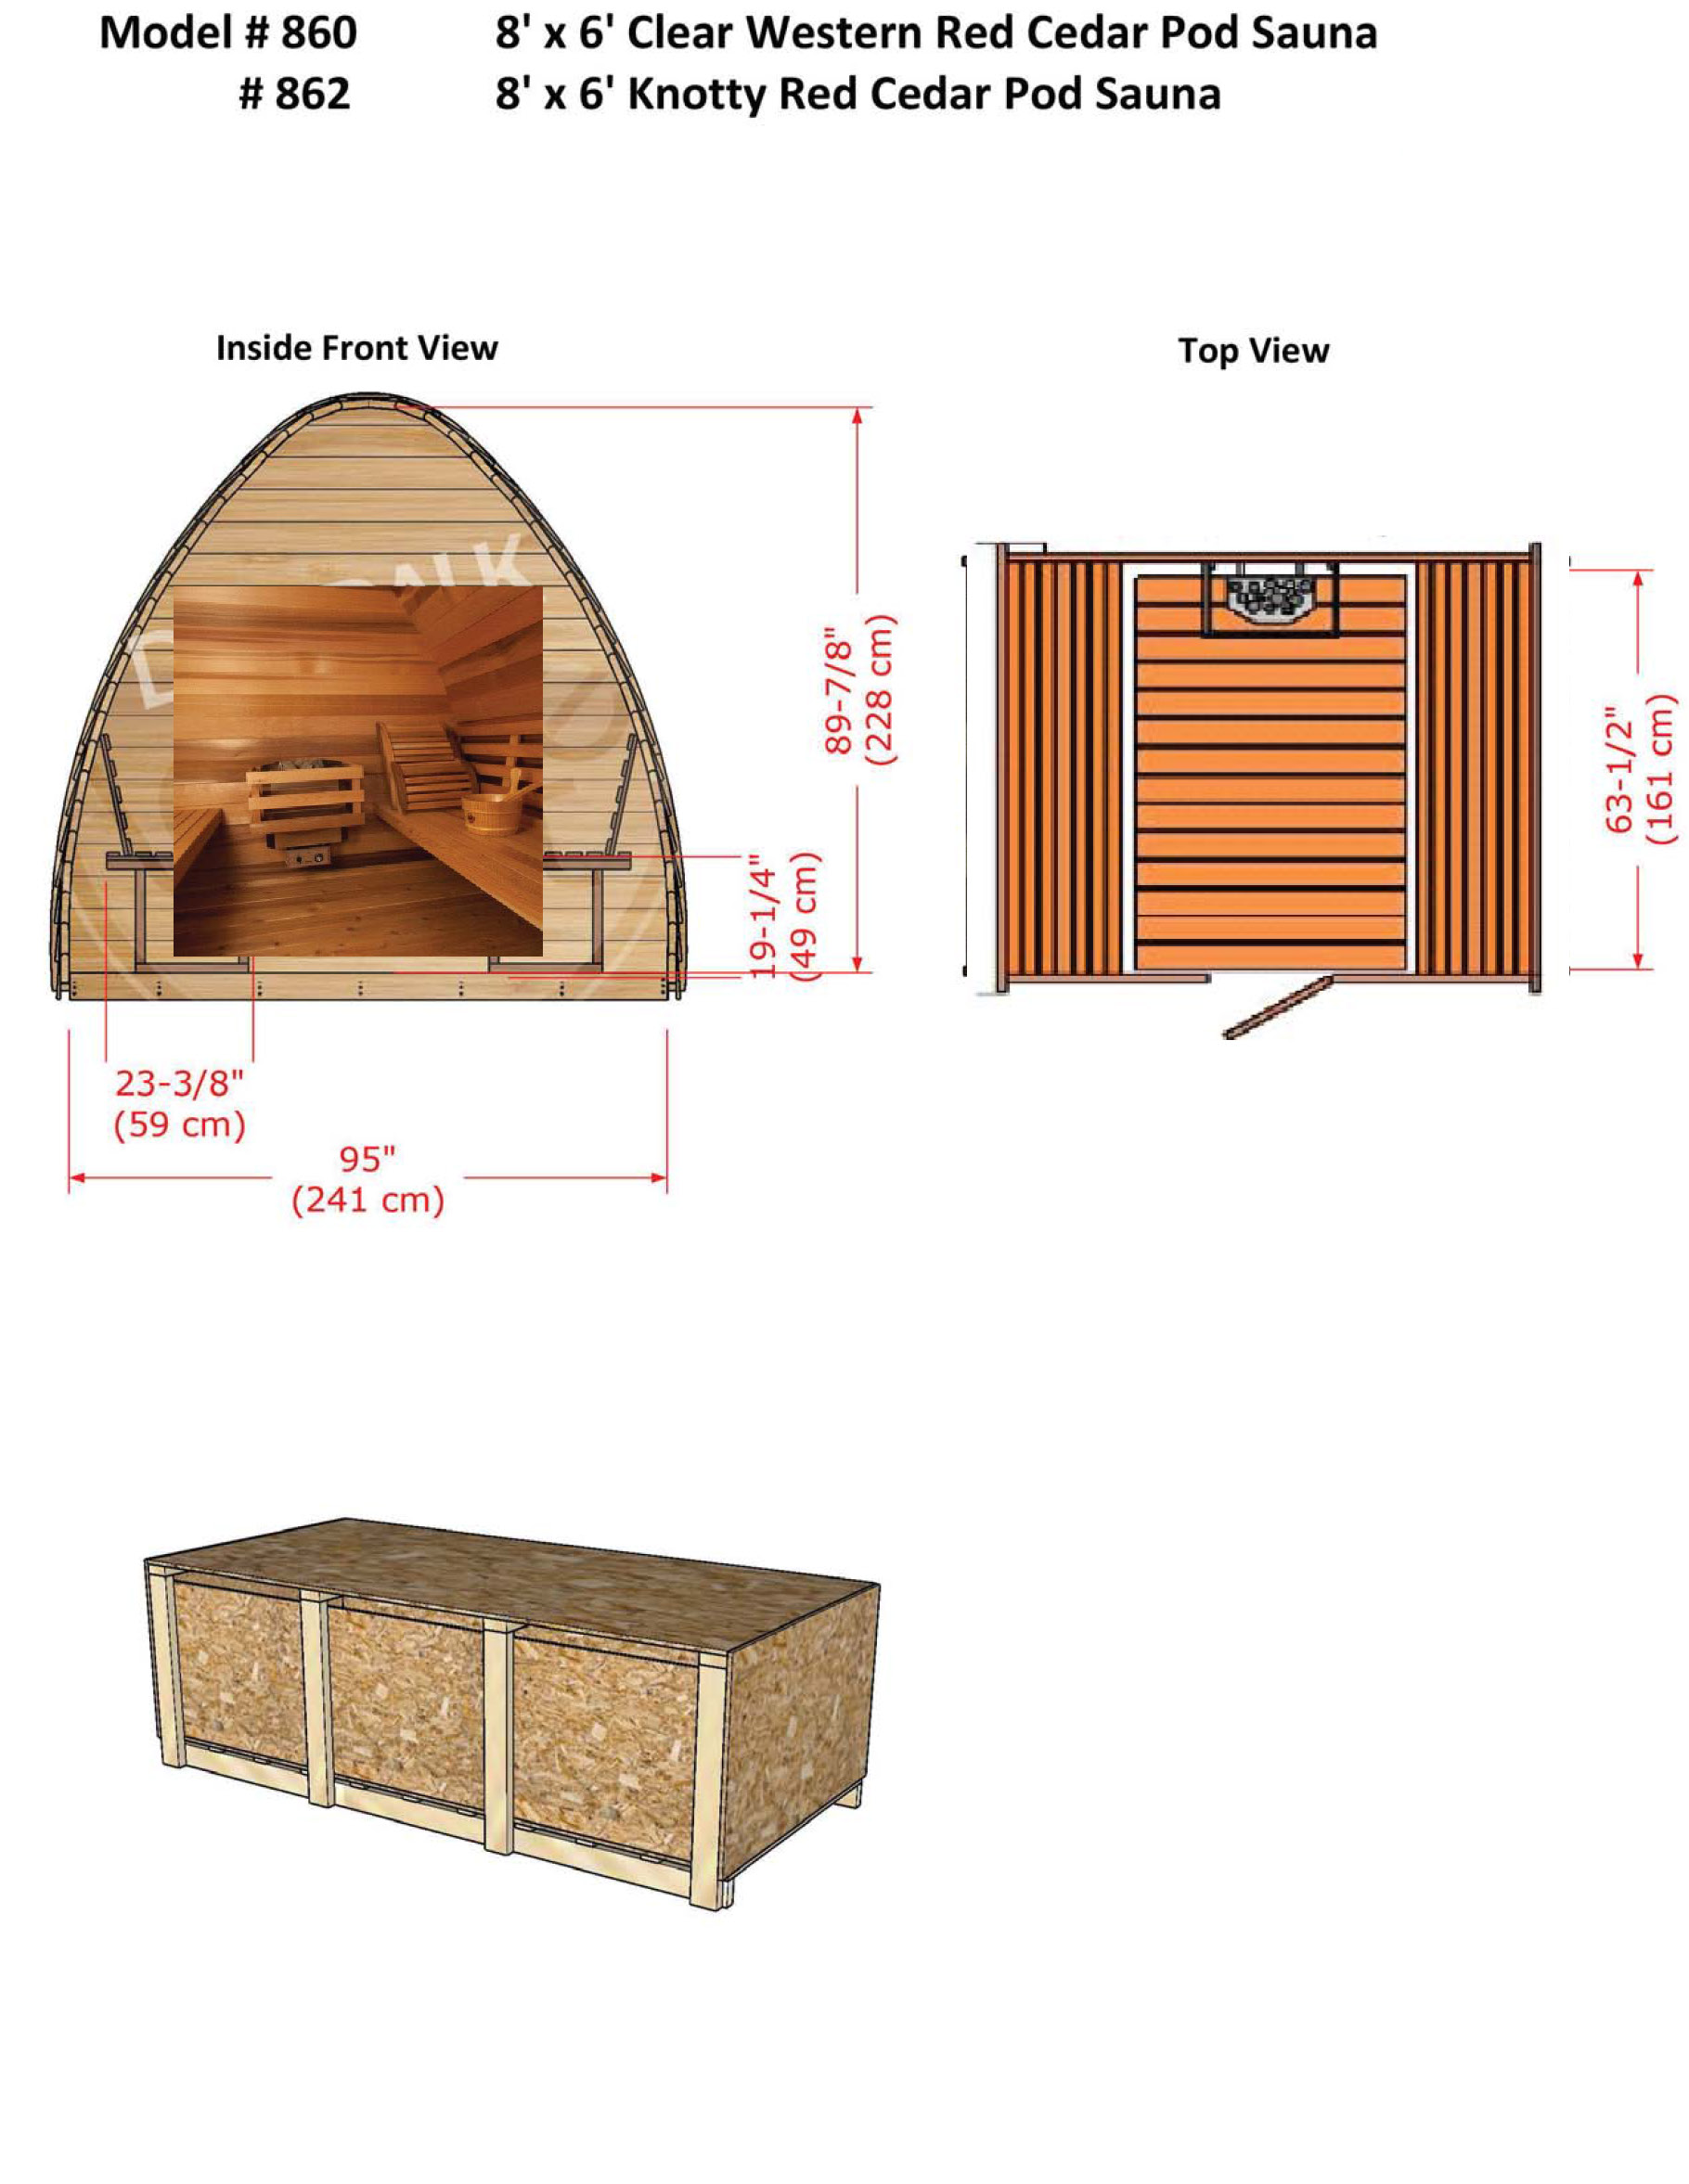 pod sauna inside view